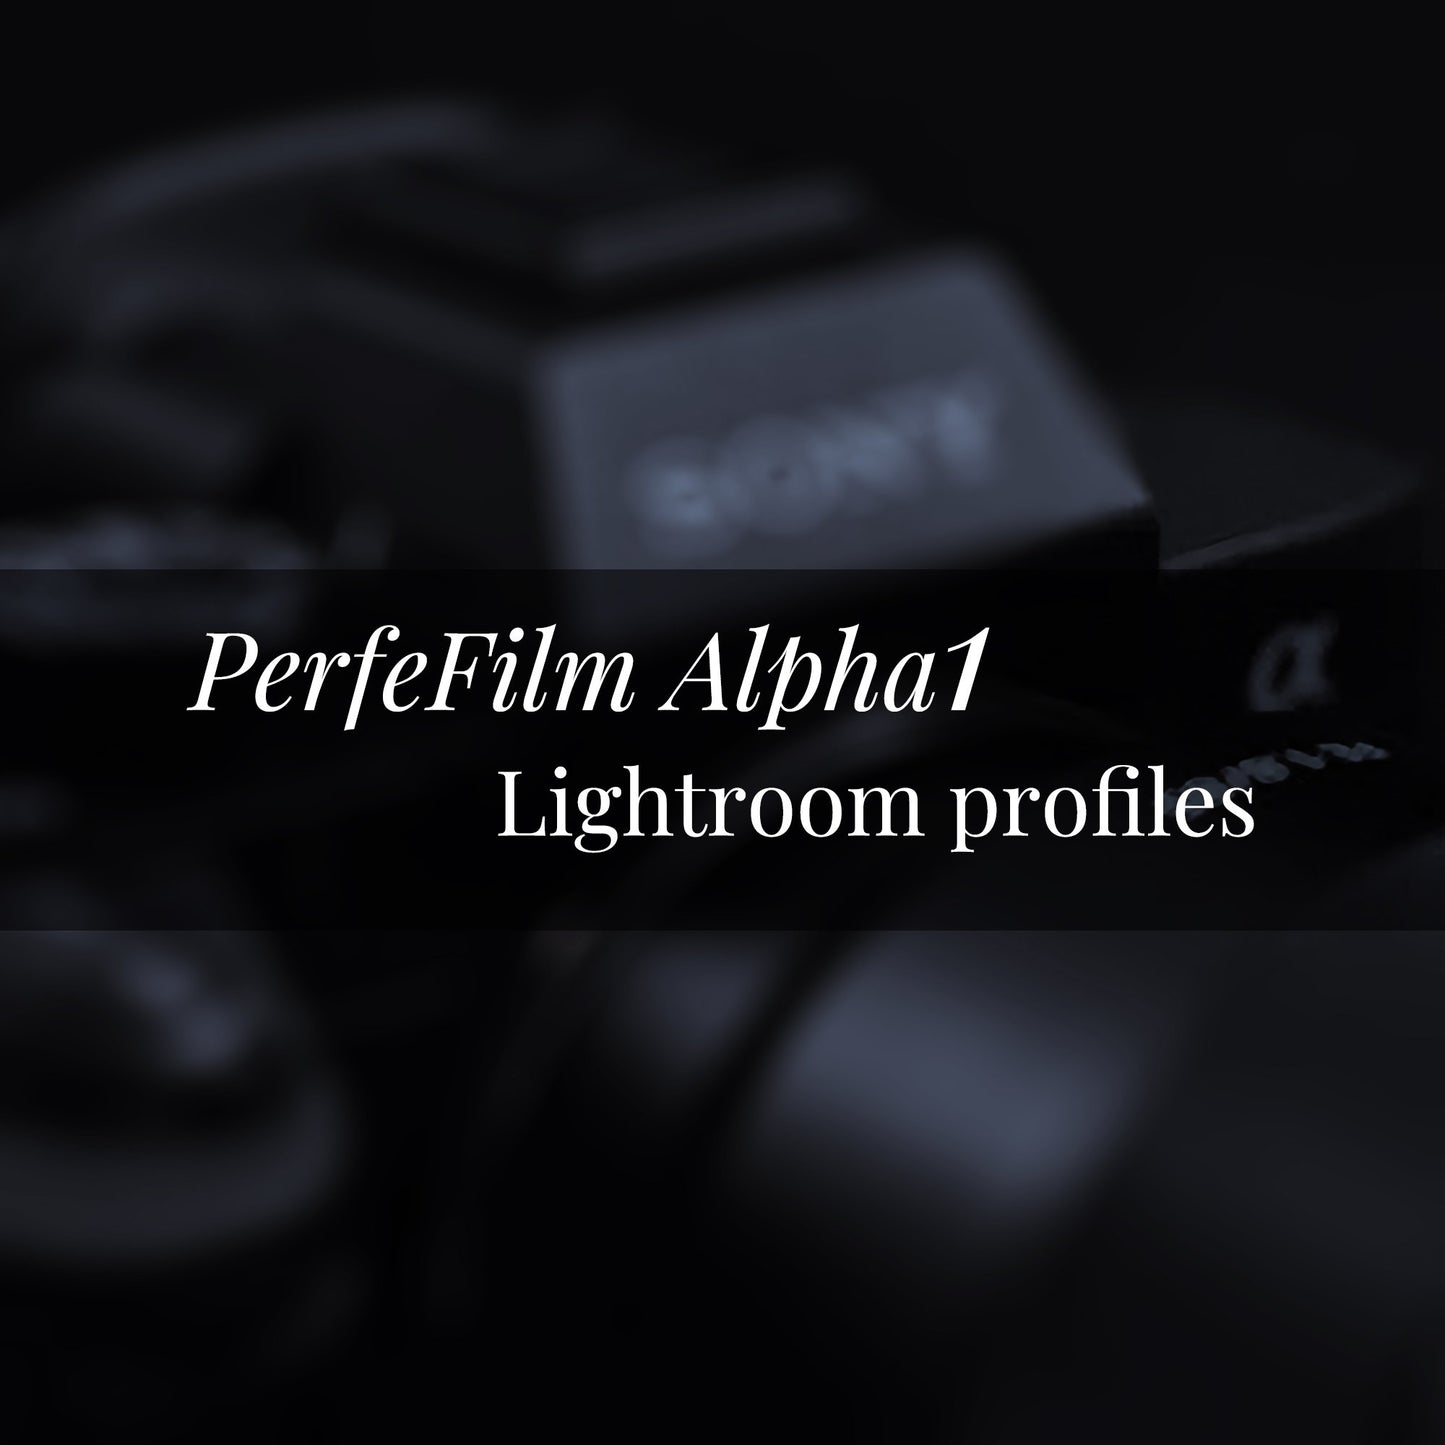 PerfeFilm Alpha One Lighroom 色彩配置文件,  单一相机授权。模拟 Sony Alpha One 色彩